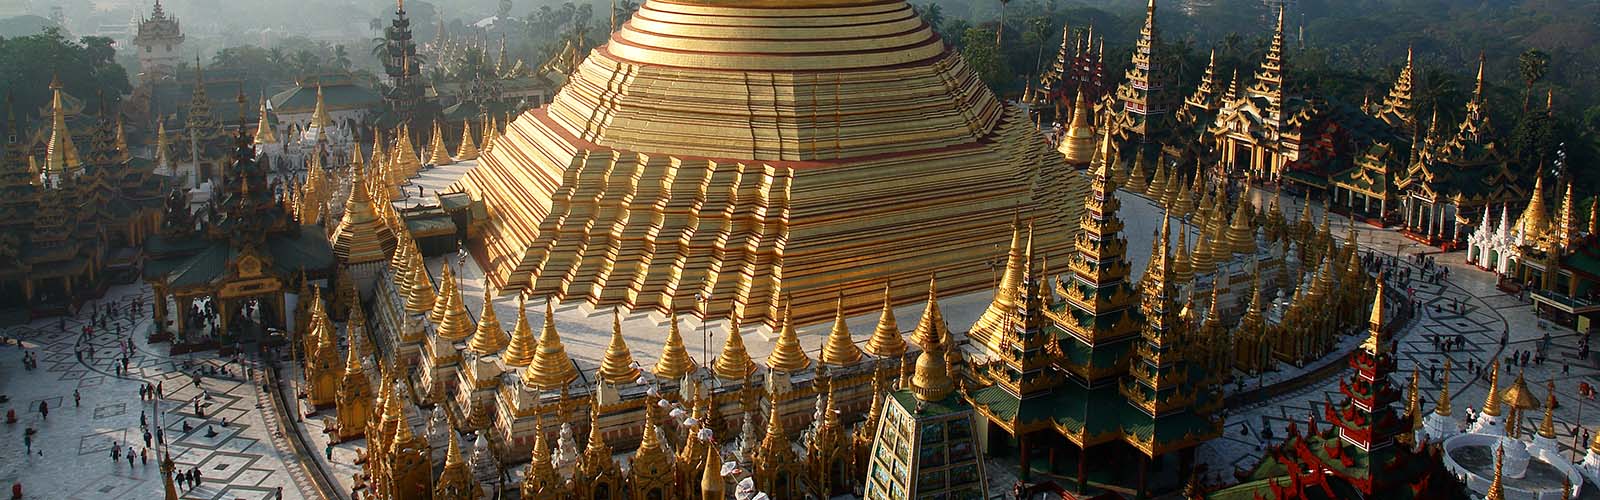 Myanmar Travel | Myanmar Tours |Myanmar Private tours | ilotustours